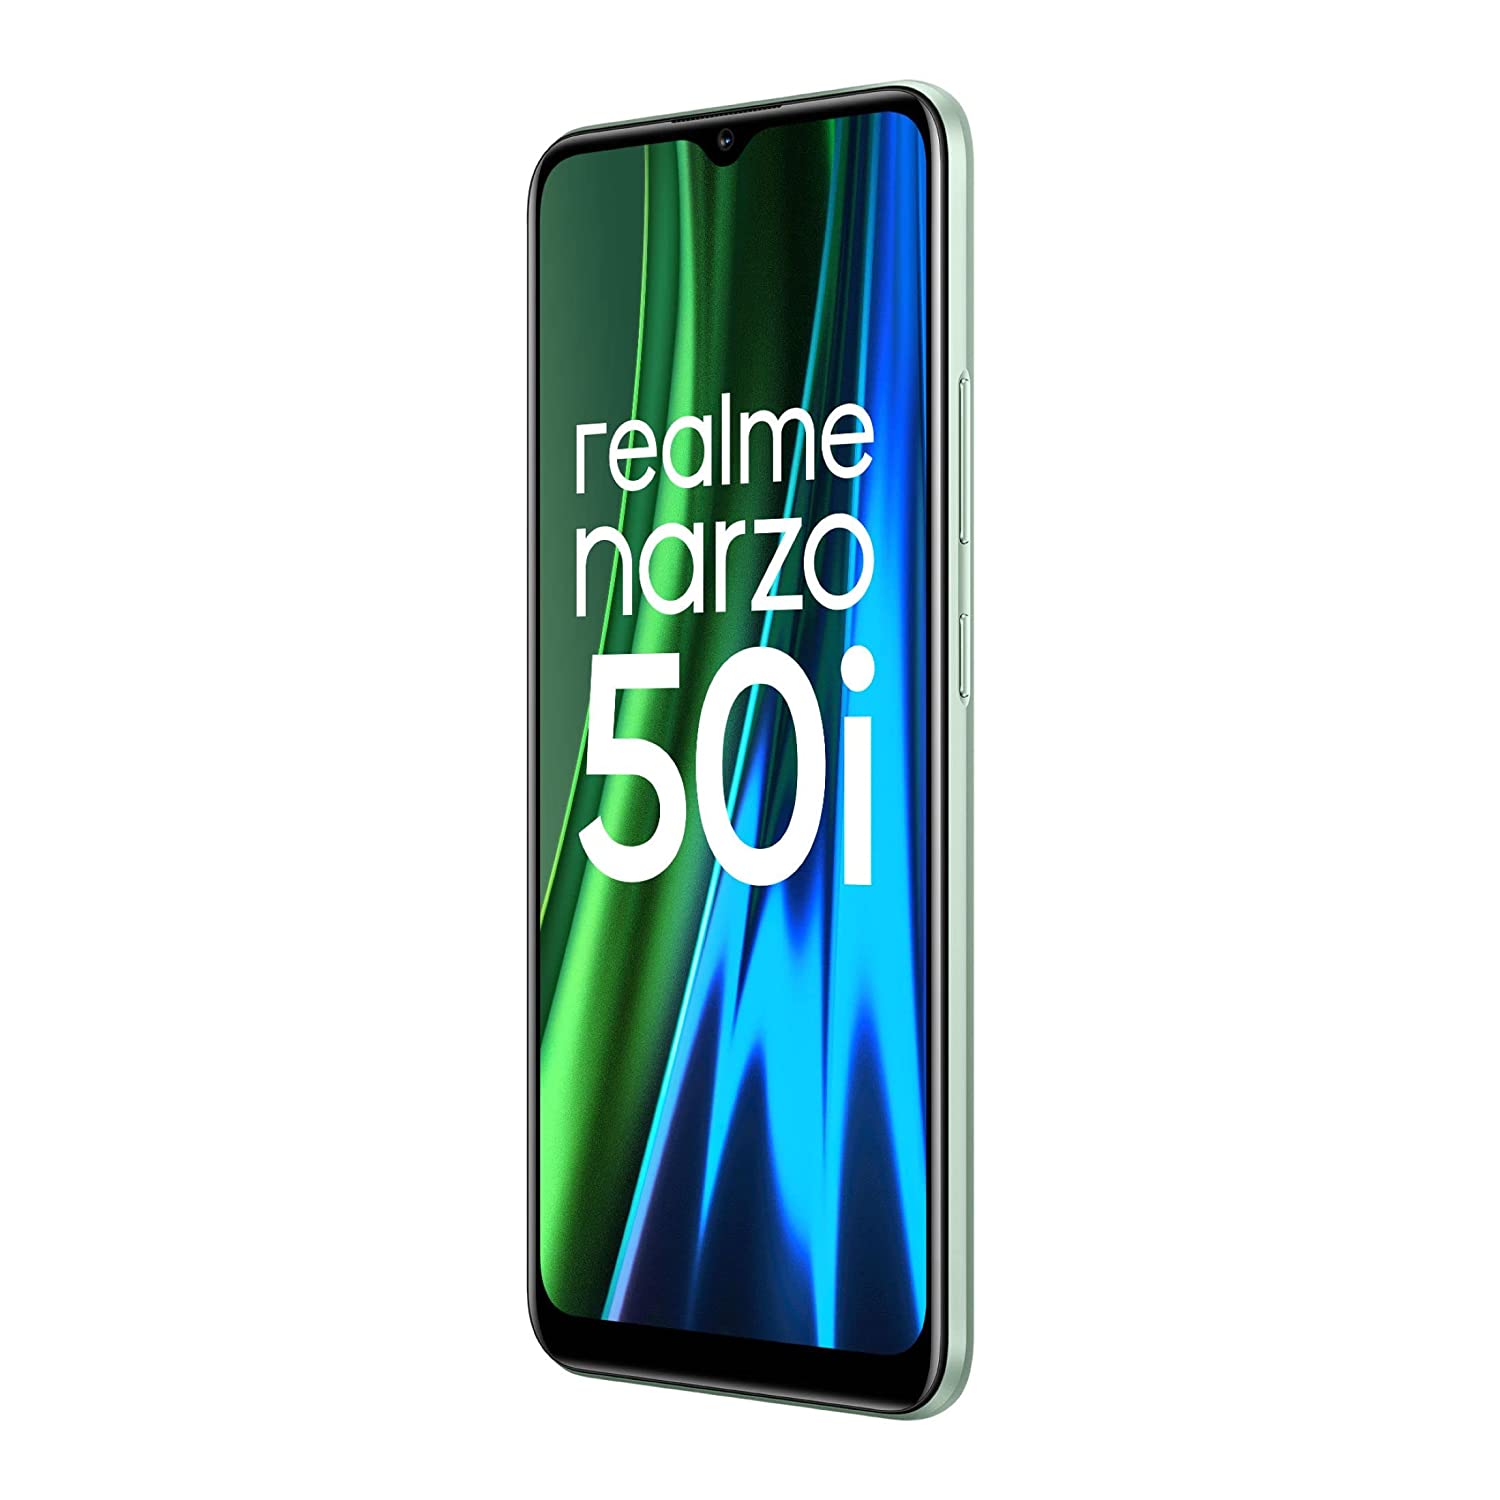 realme Narzo 50i (Mint Green, 64 GB)  (4 GB RAM)